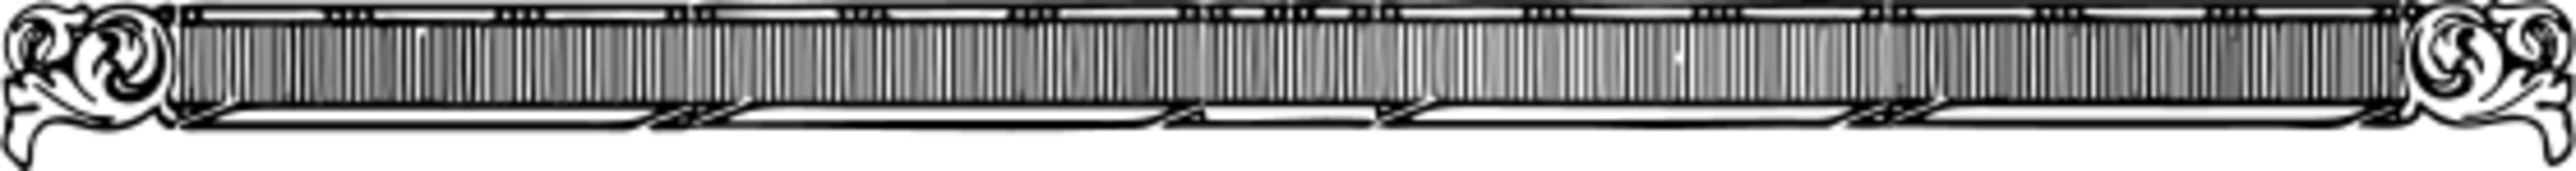 clip art clipart svg openclipart black white frame decorative ornament decoration border pattern belt banner externalsource style ornate shaped 剪贴画 装饰 黑色 白色 边框 花样 横幅